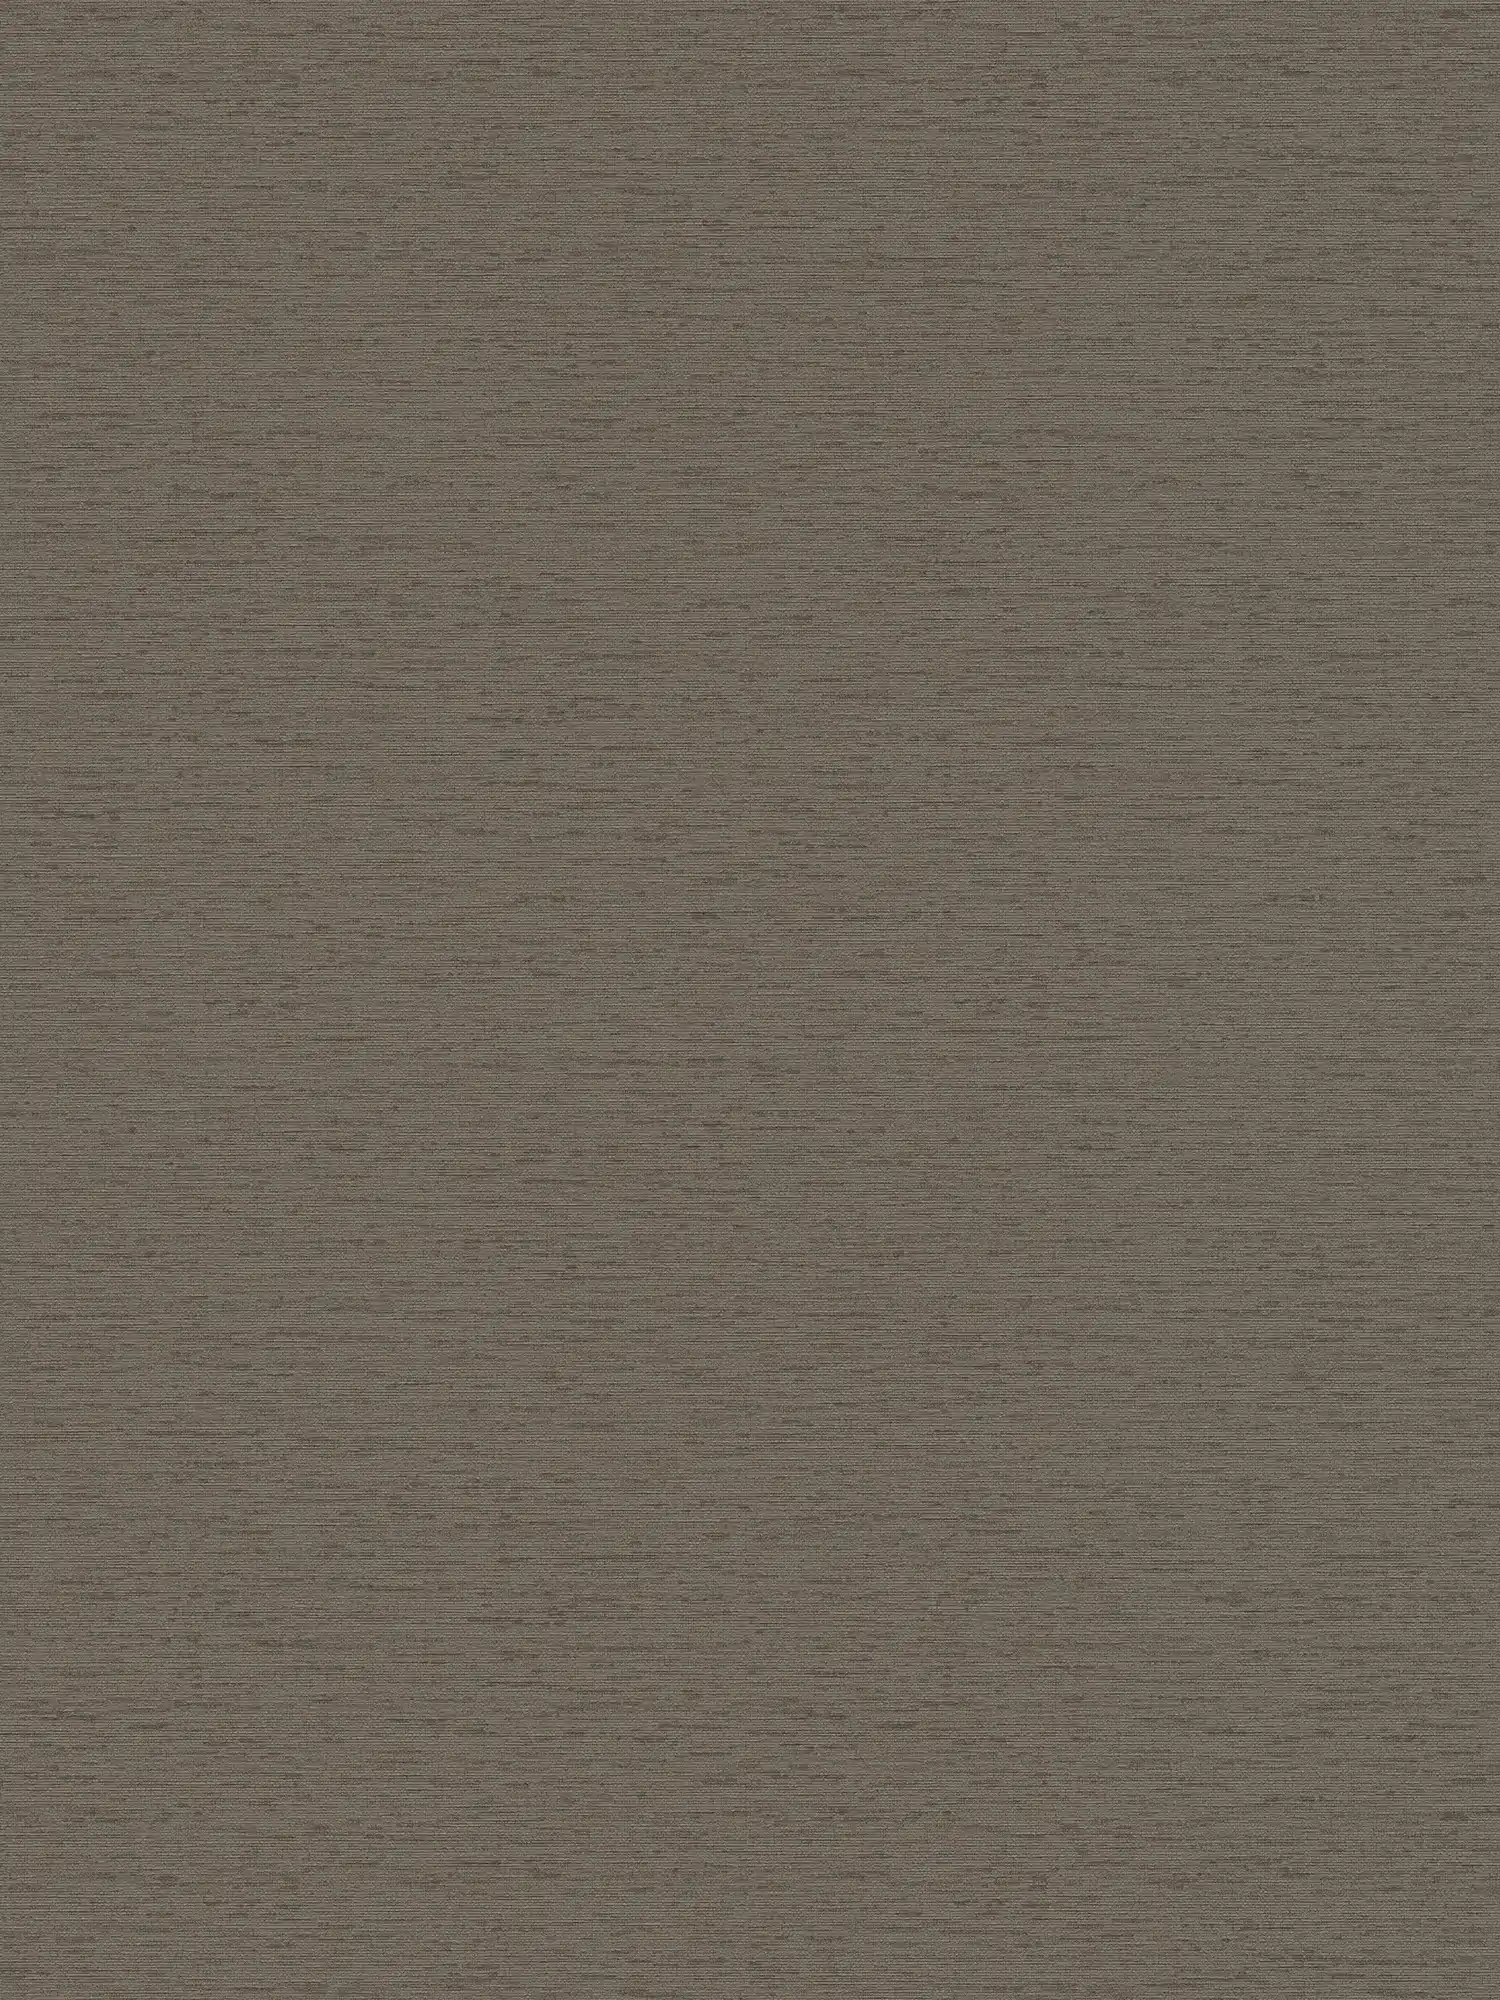 Plain wallpaper in fabric look with light structure, matt - brown
